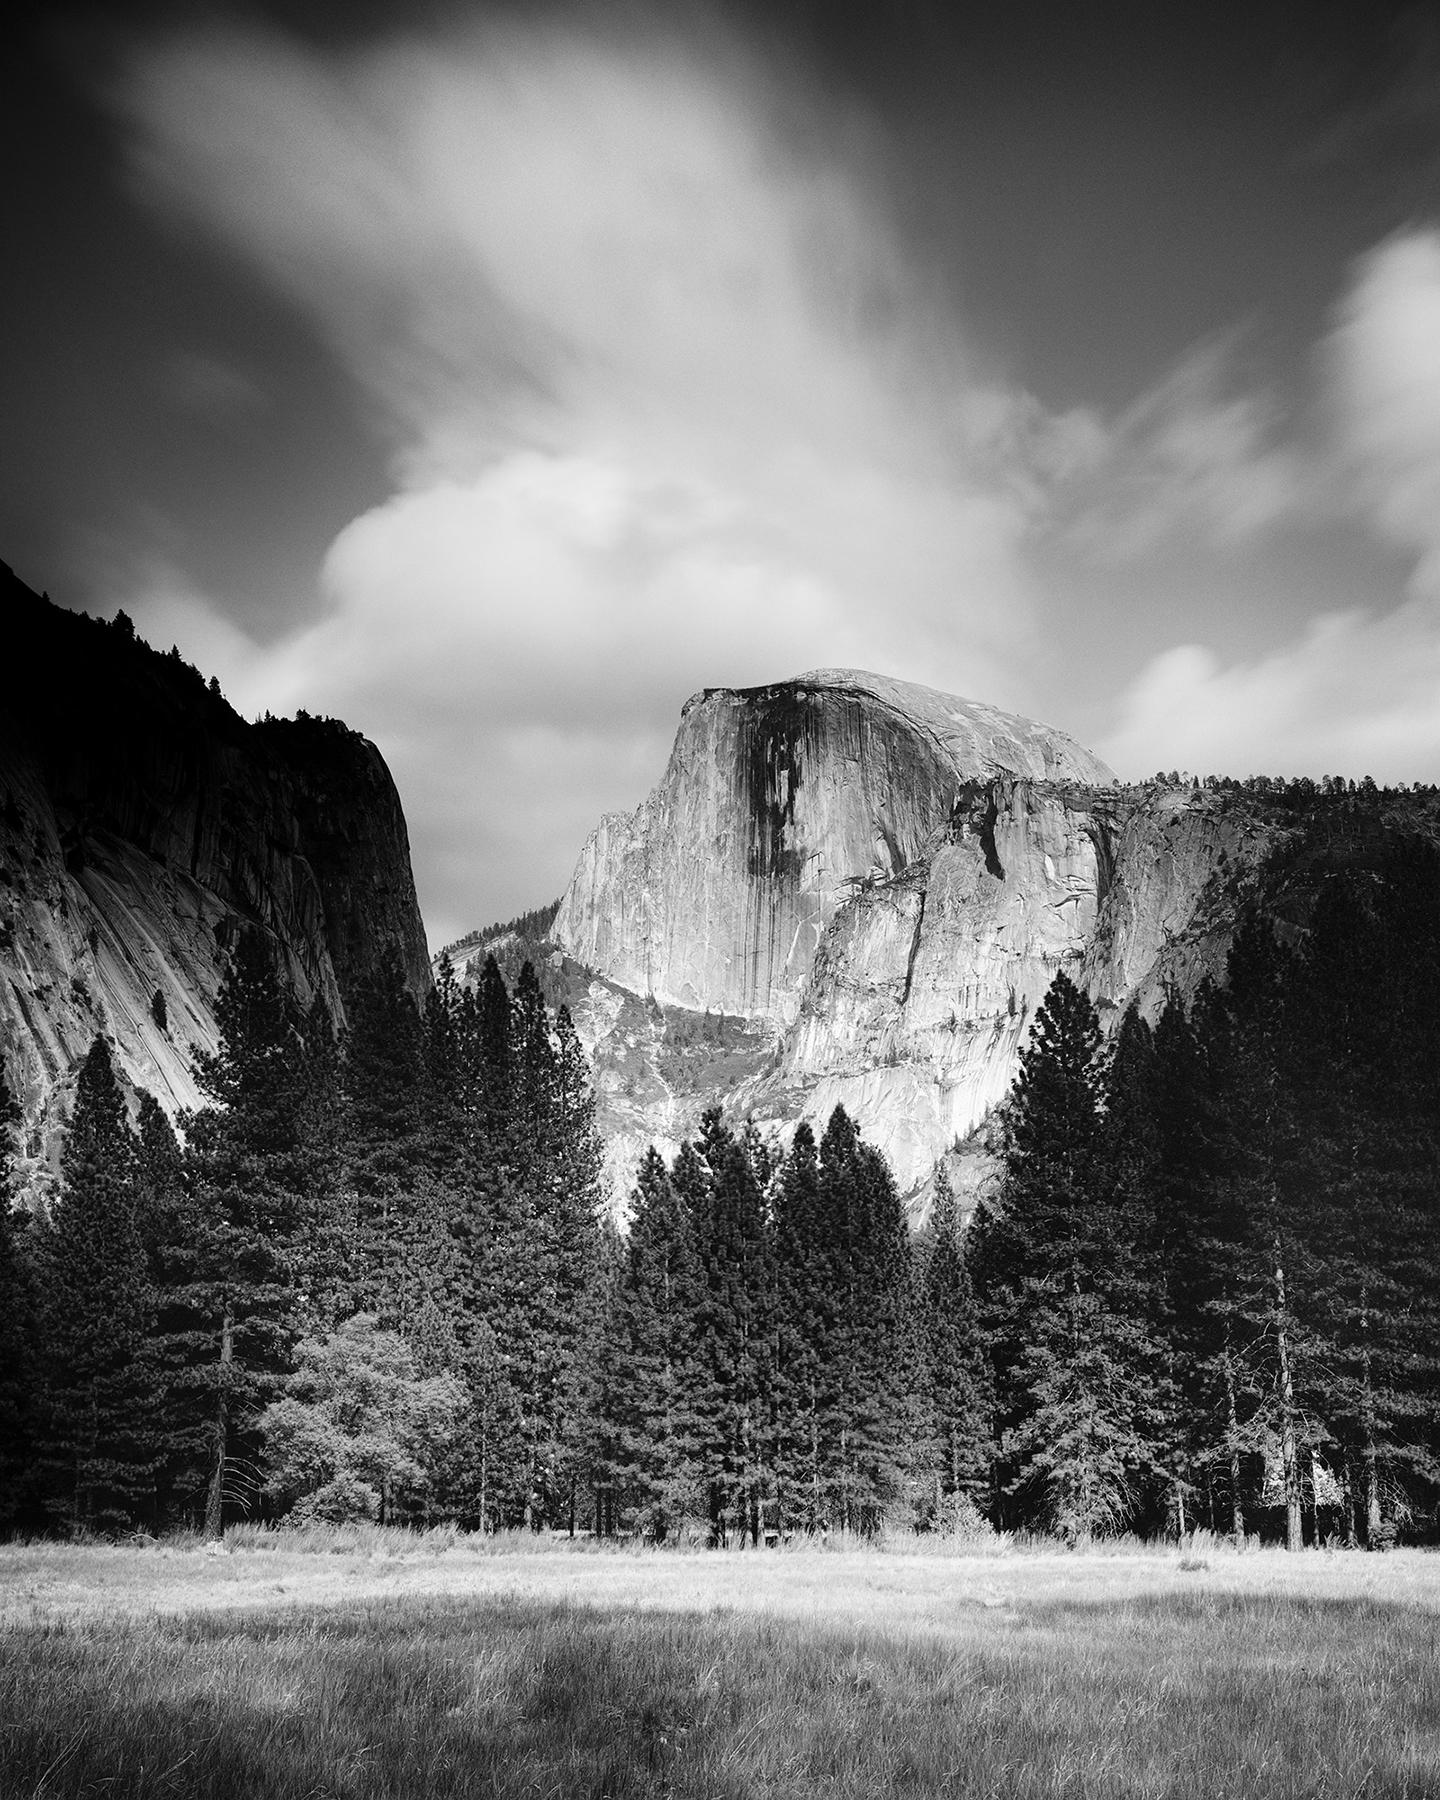 Landscape Photograph Gerald Berghammer - Half Dome, Yosemite National Park, USA, photographie noir et blanc, paysage